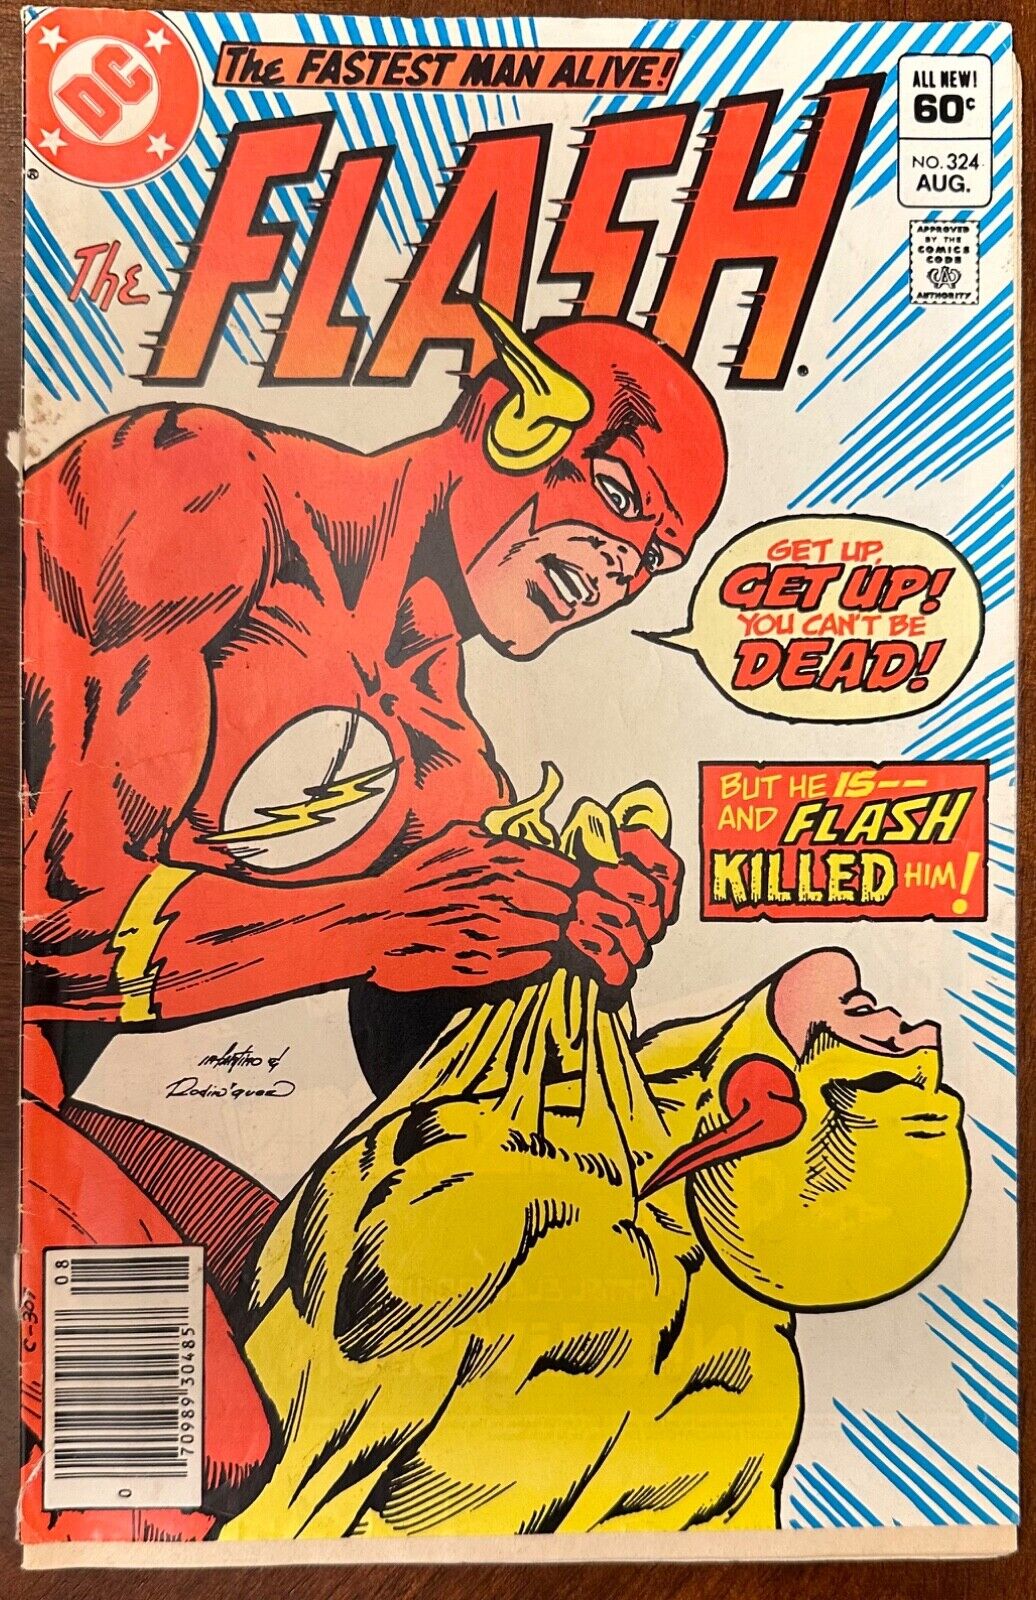 The Flash #324 | August 1983 DC Comics *COVER DETACHED*